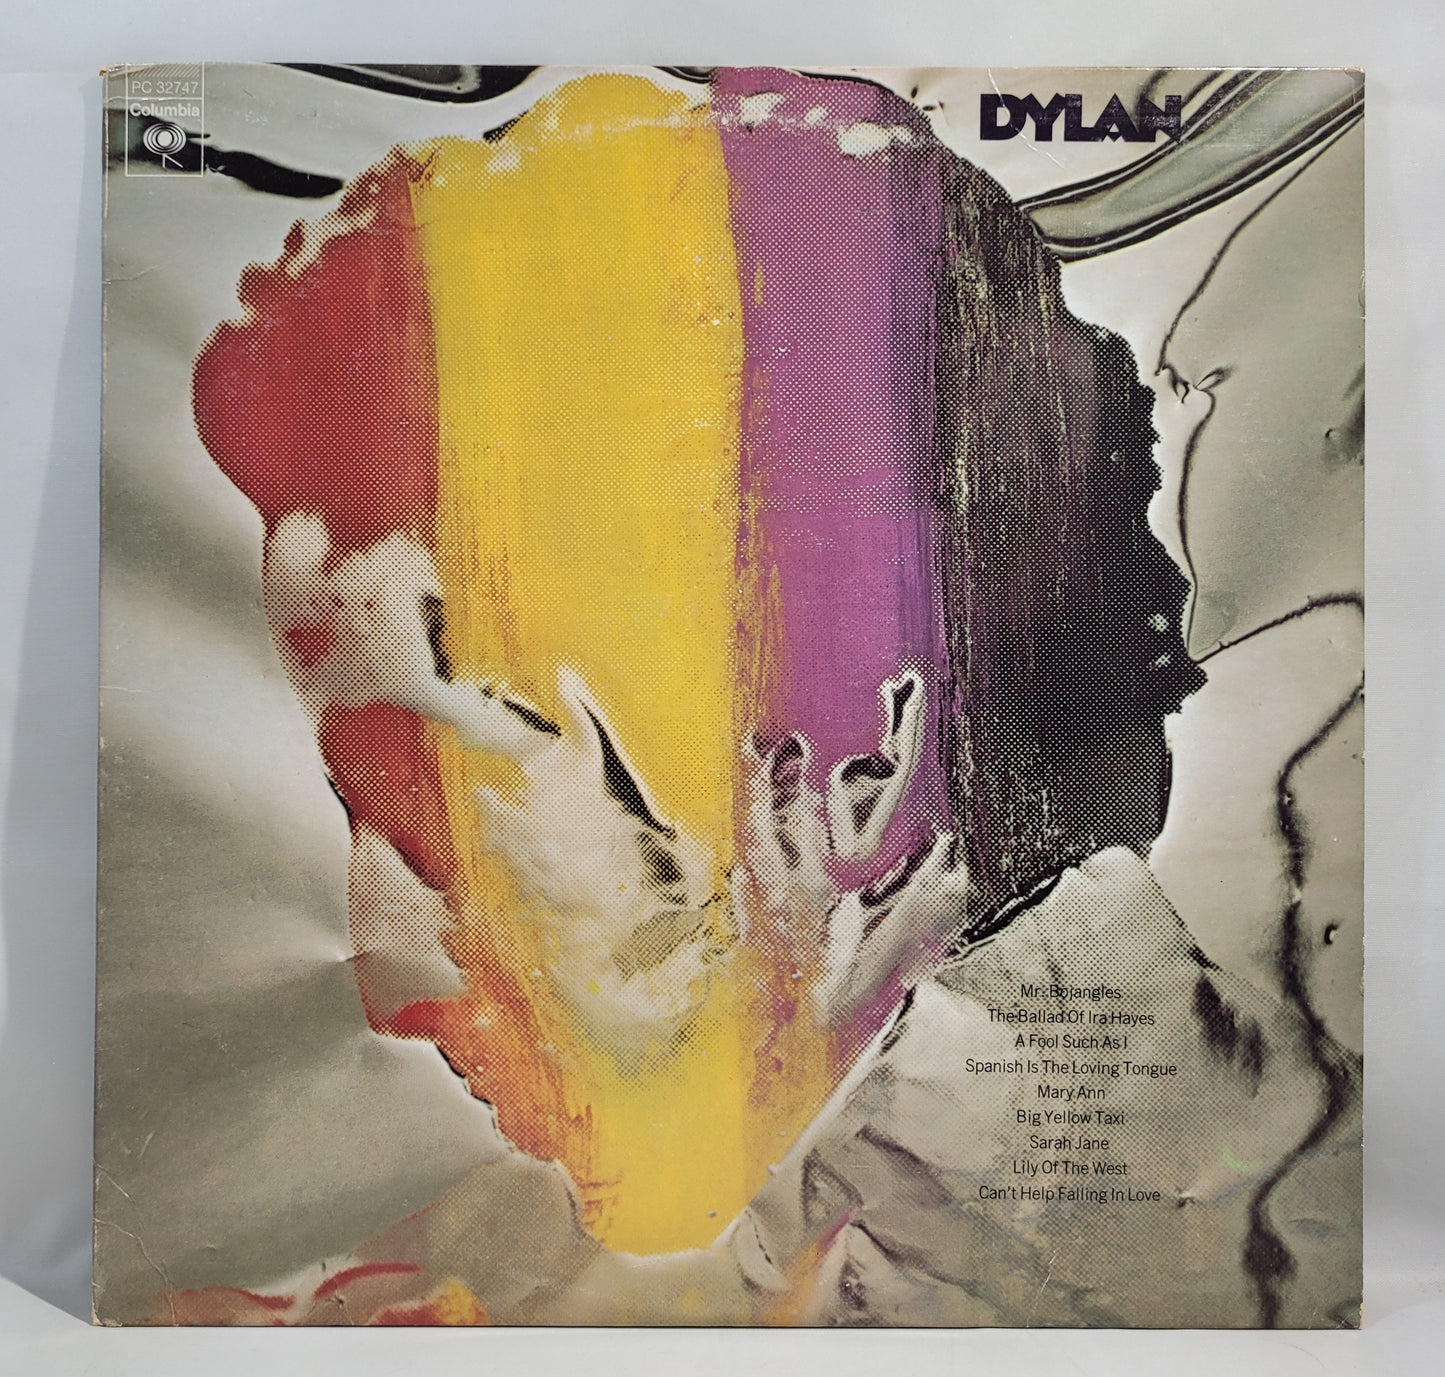 Bob Dylan - Dylan [Vinyl Record LP]